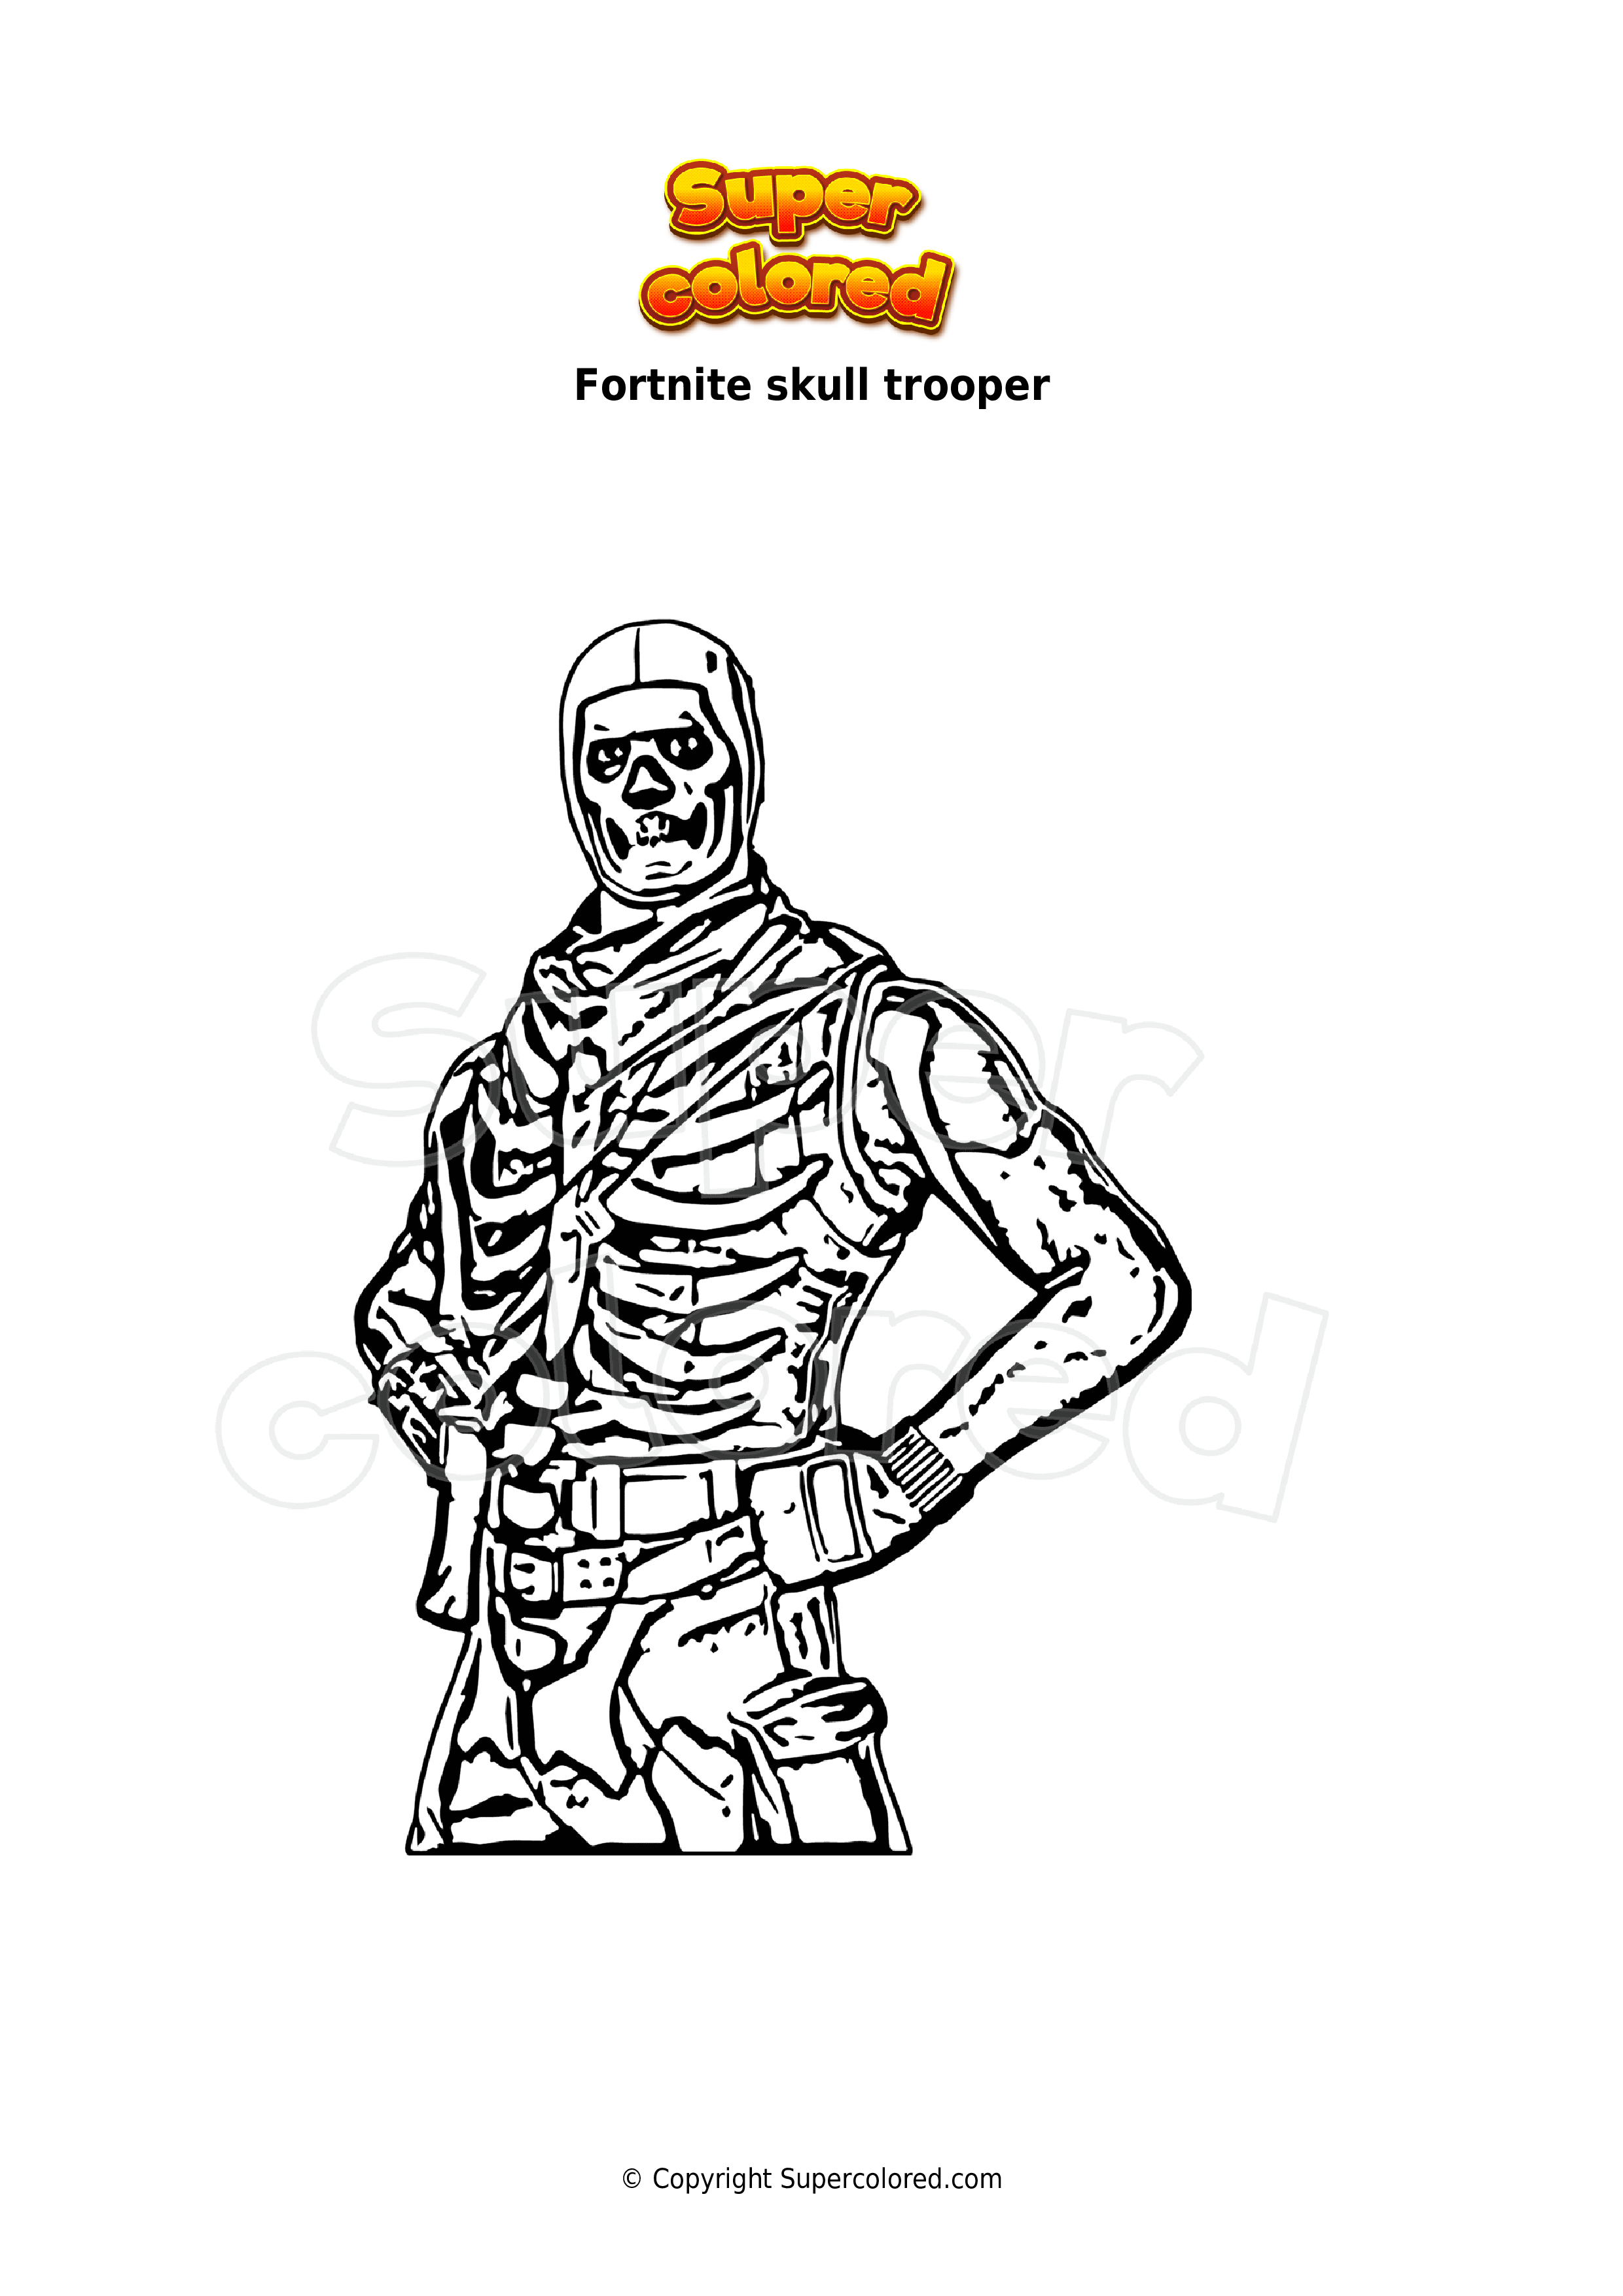 Coloring page Fortnite skull trooper - Supercolored.com